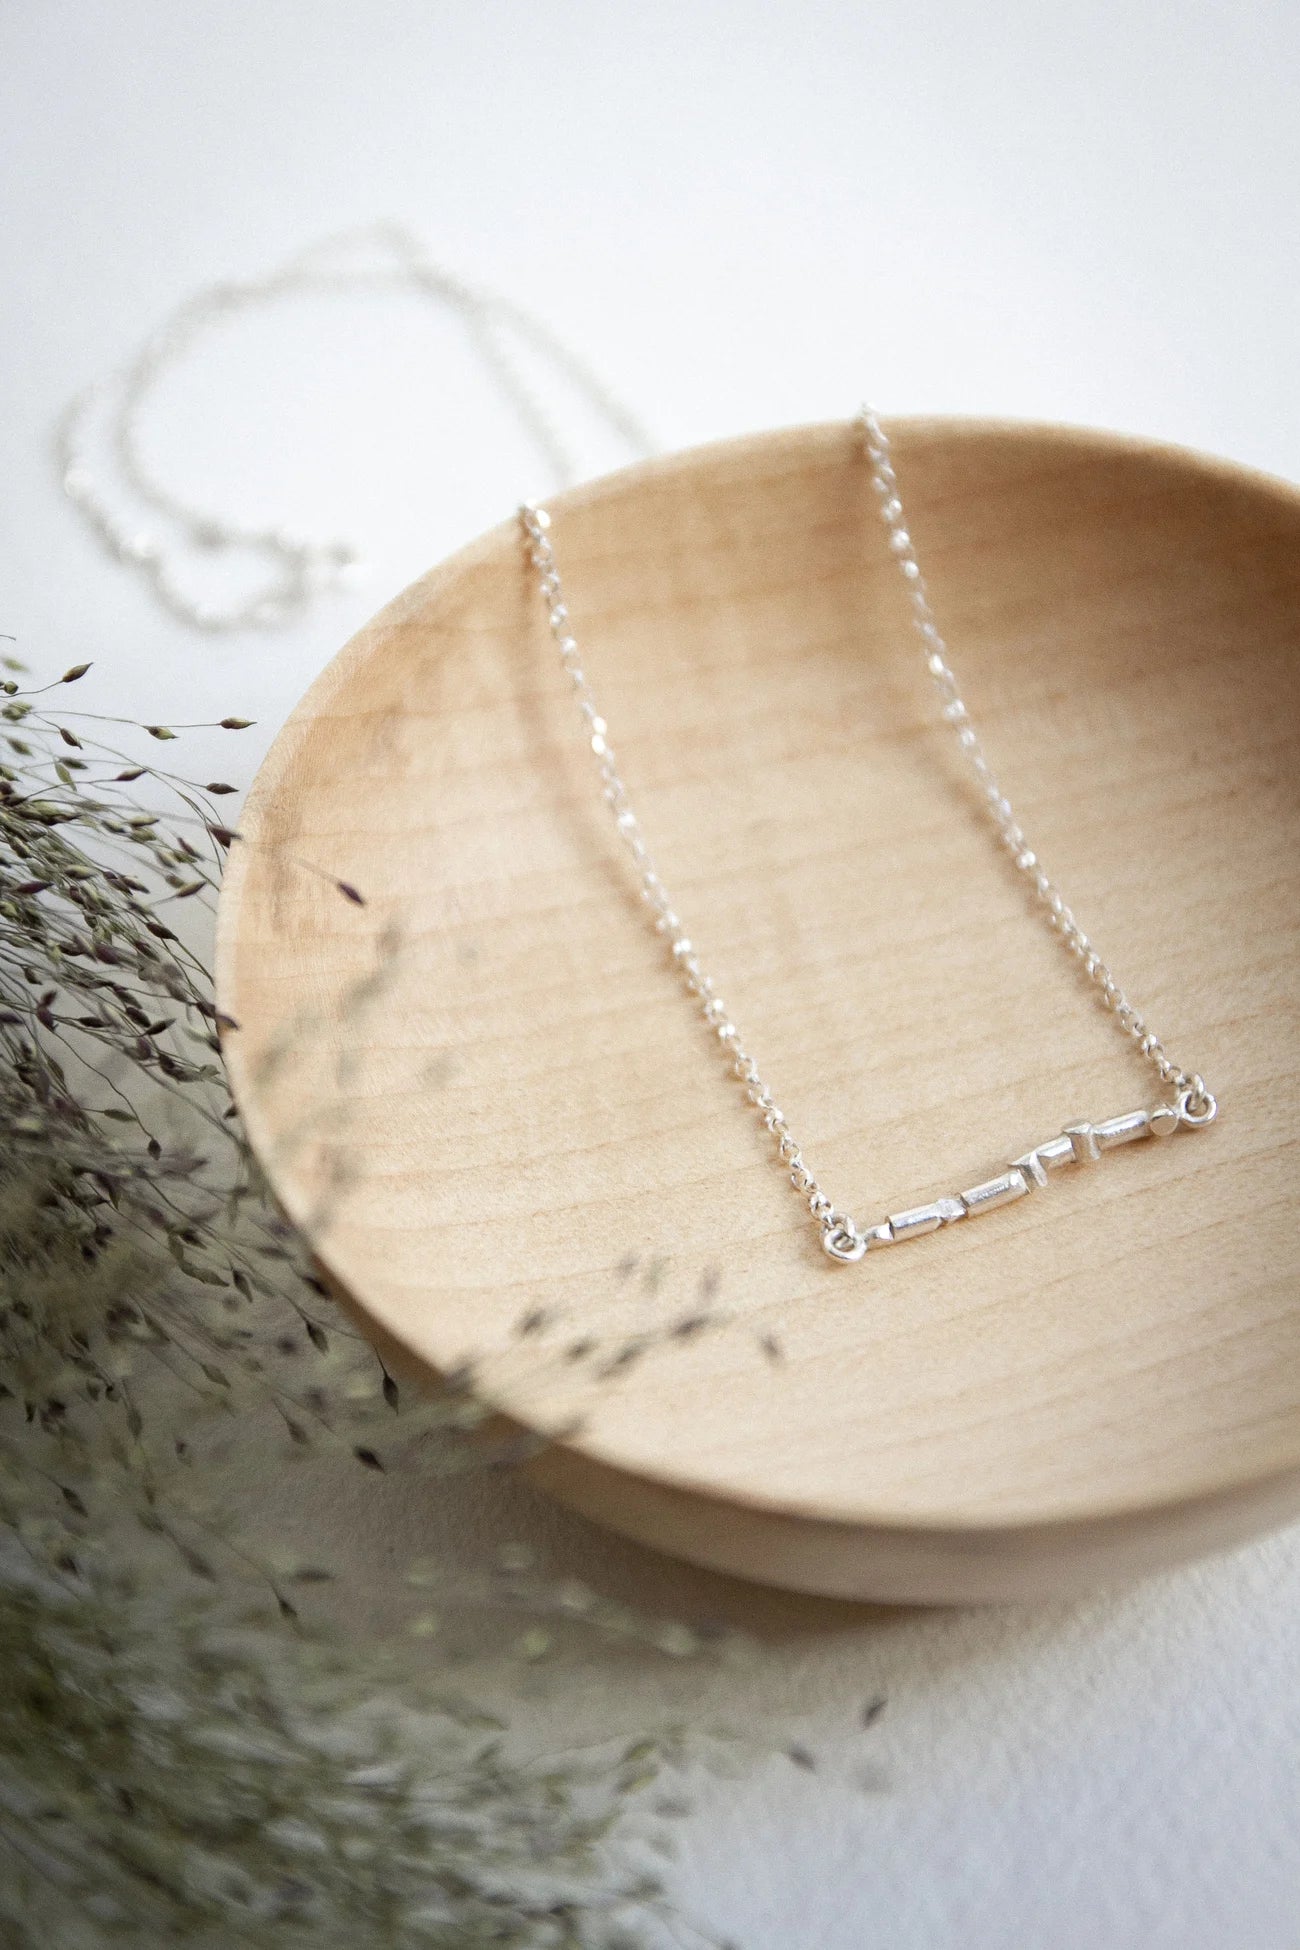 Clare Elizabeth Kilgour Sustainable Jewellery Design